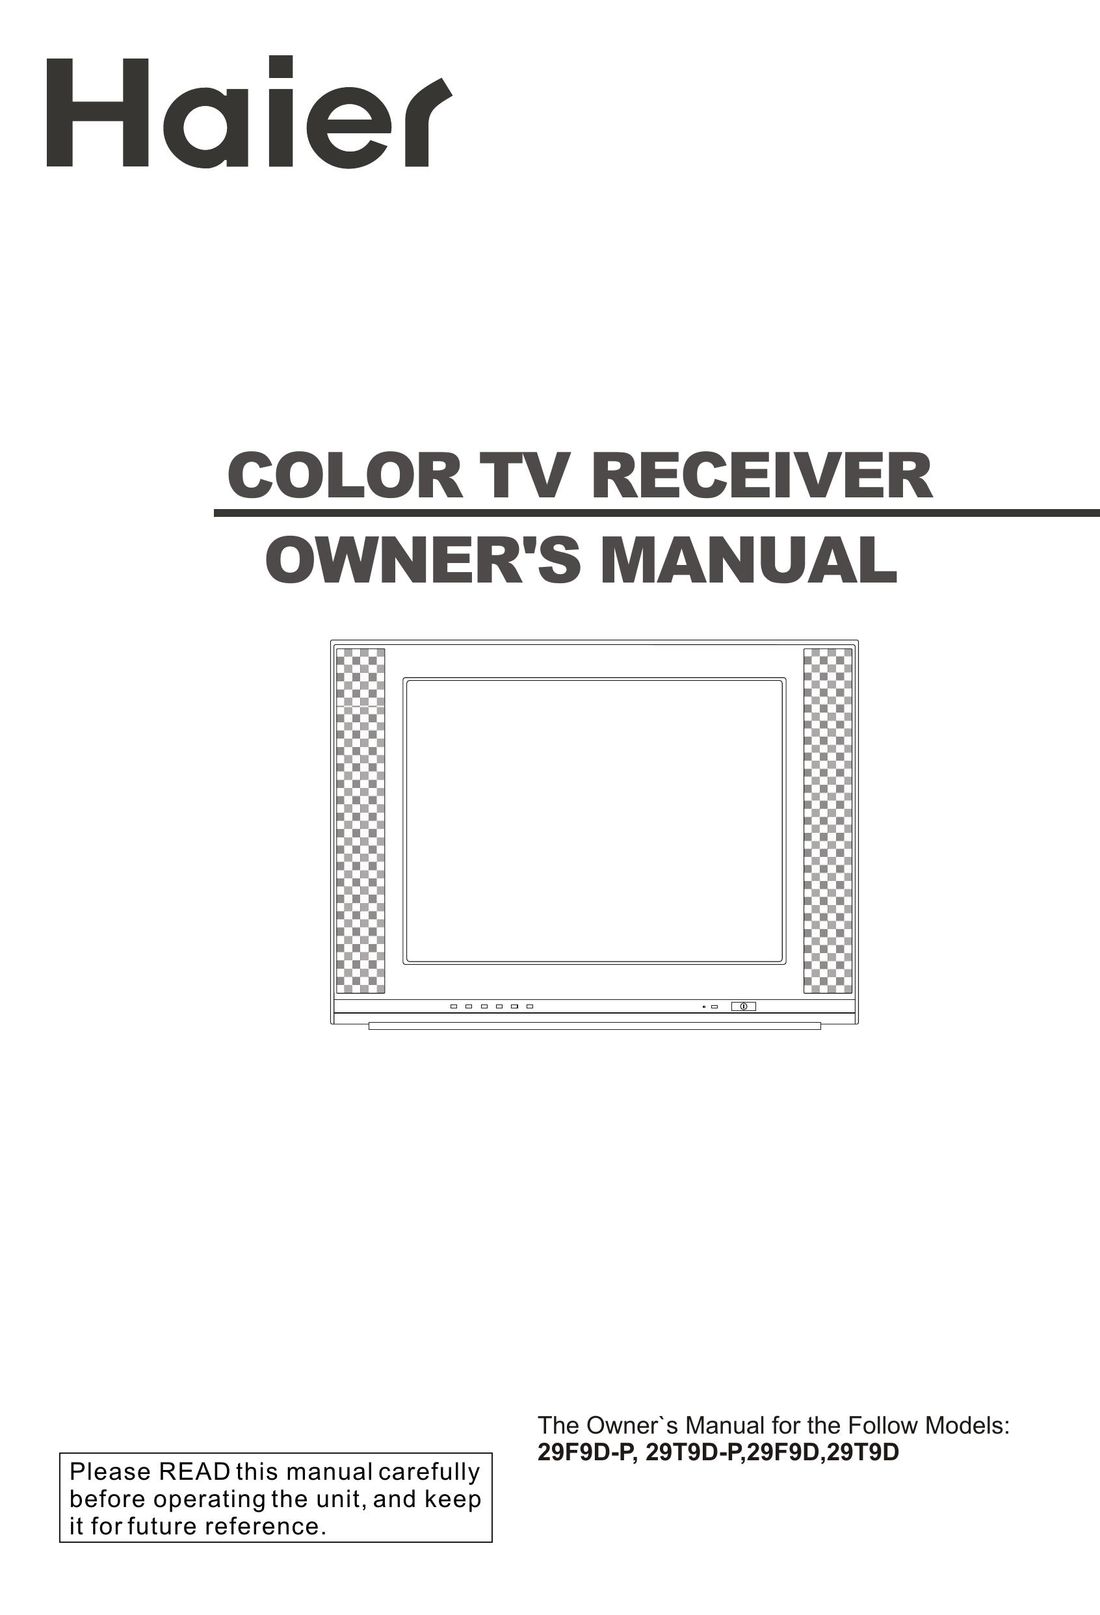 Haier 29F9D-P Satellite TV System User Manual